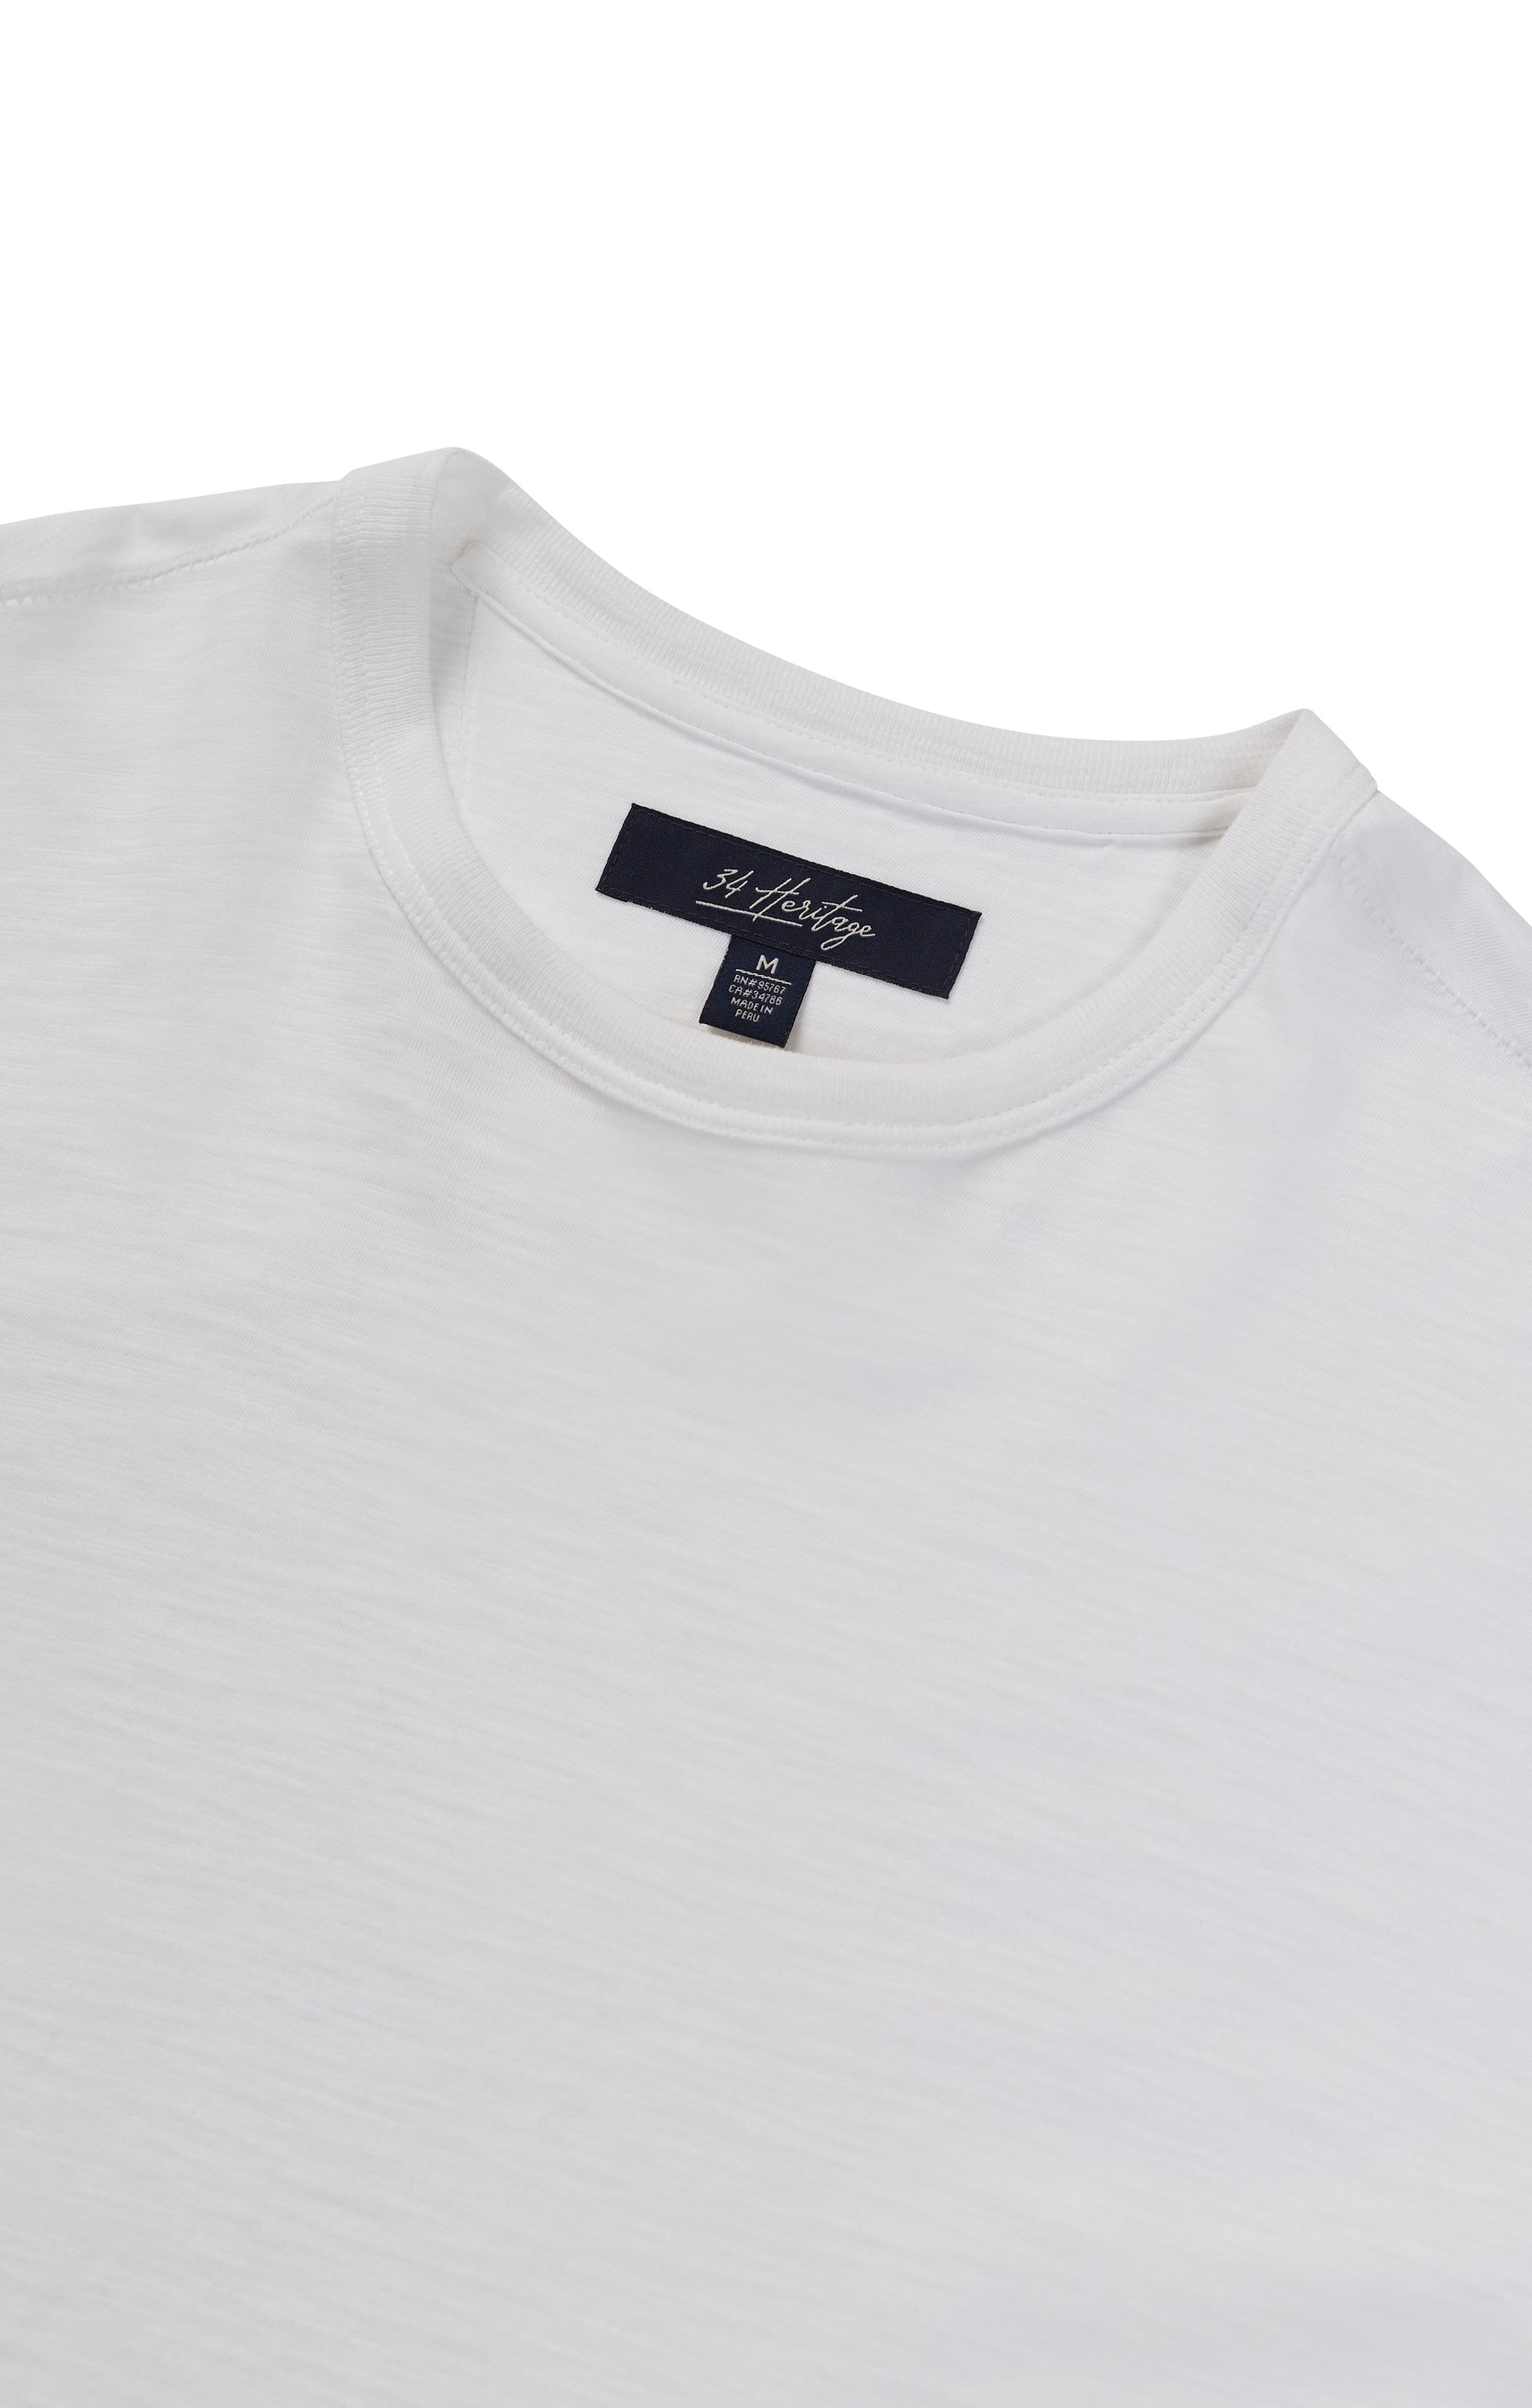 Slub Crew Neck T-Shirt in White Image 10